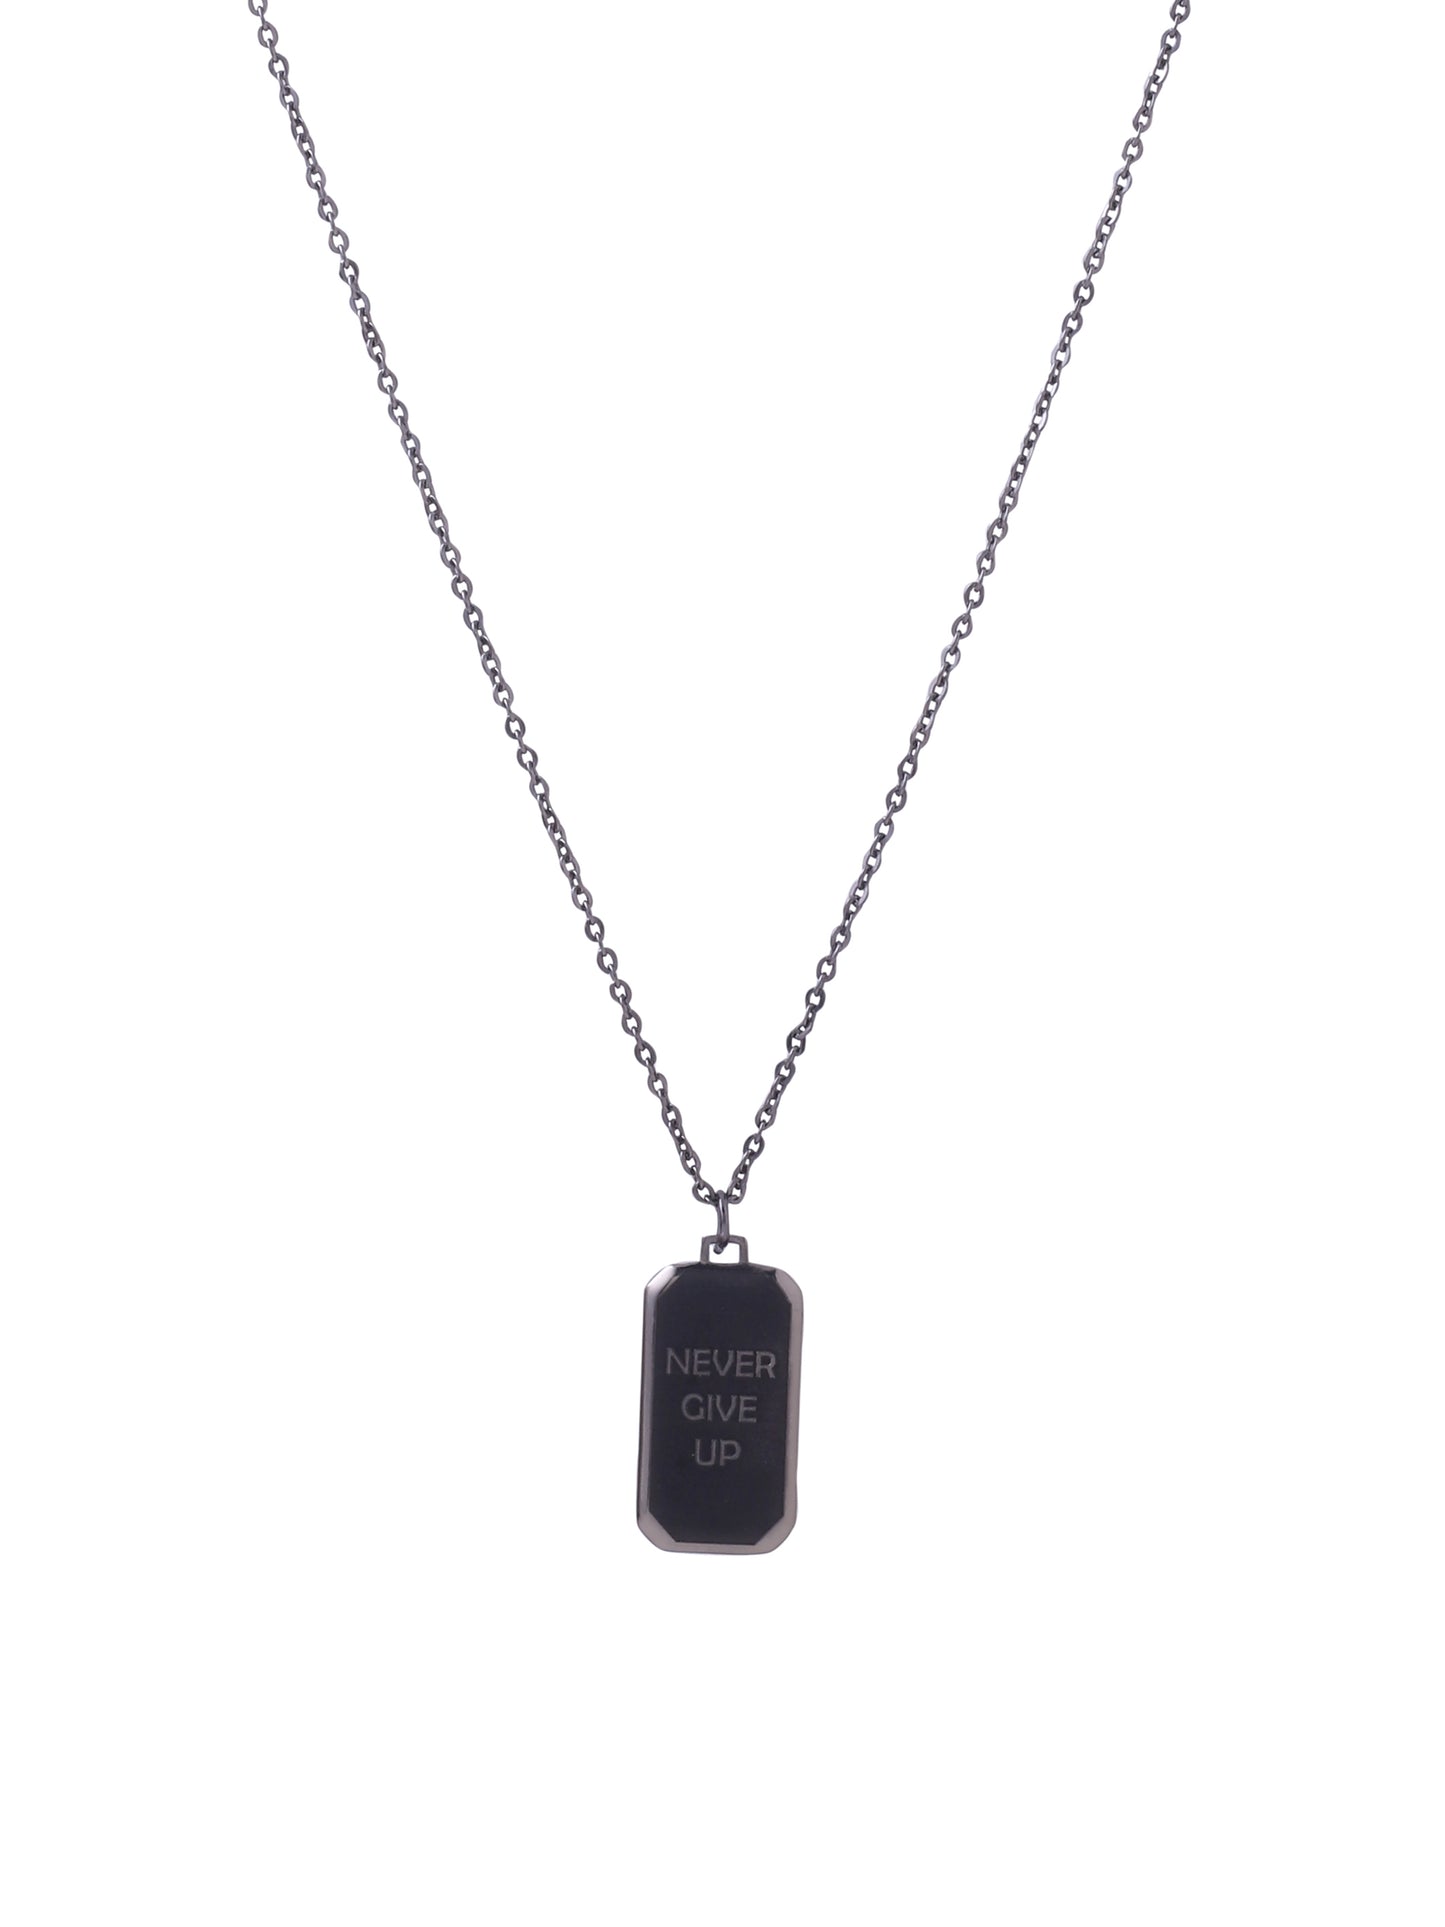 Sentinel's Crest black pendant with chain